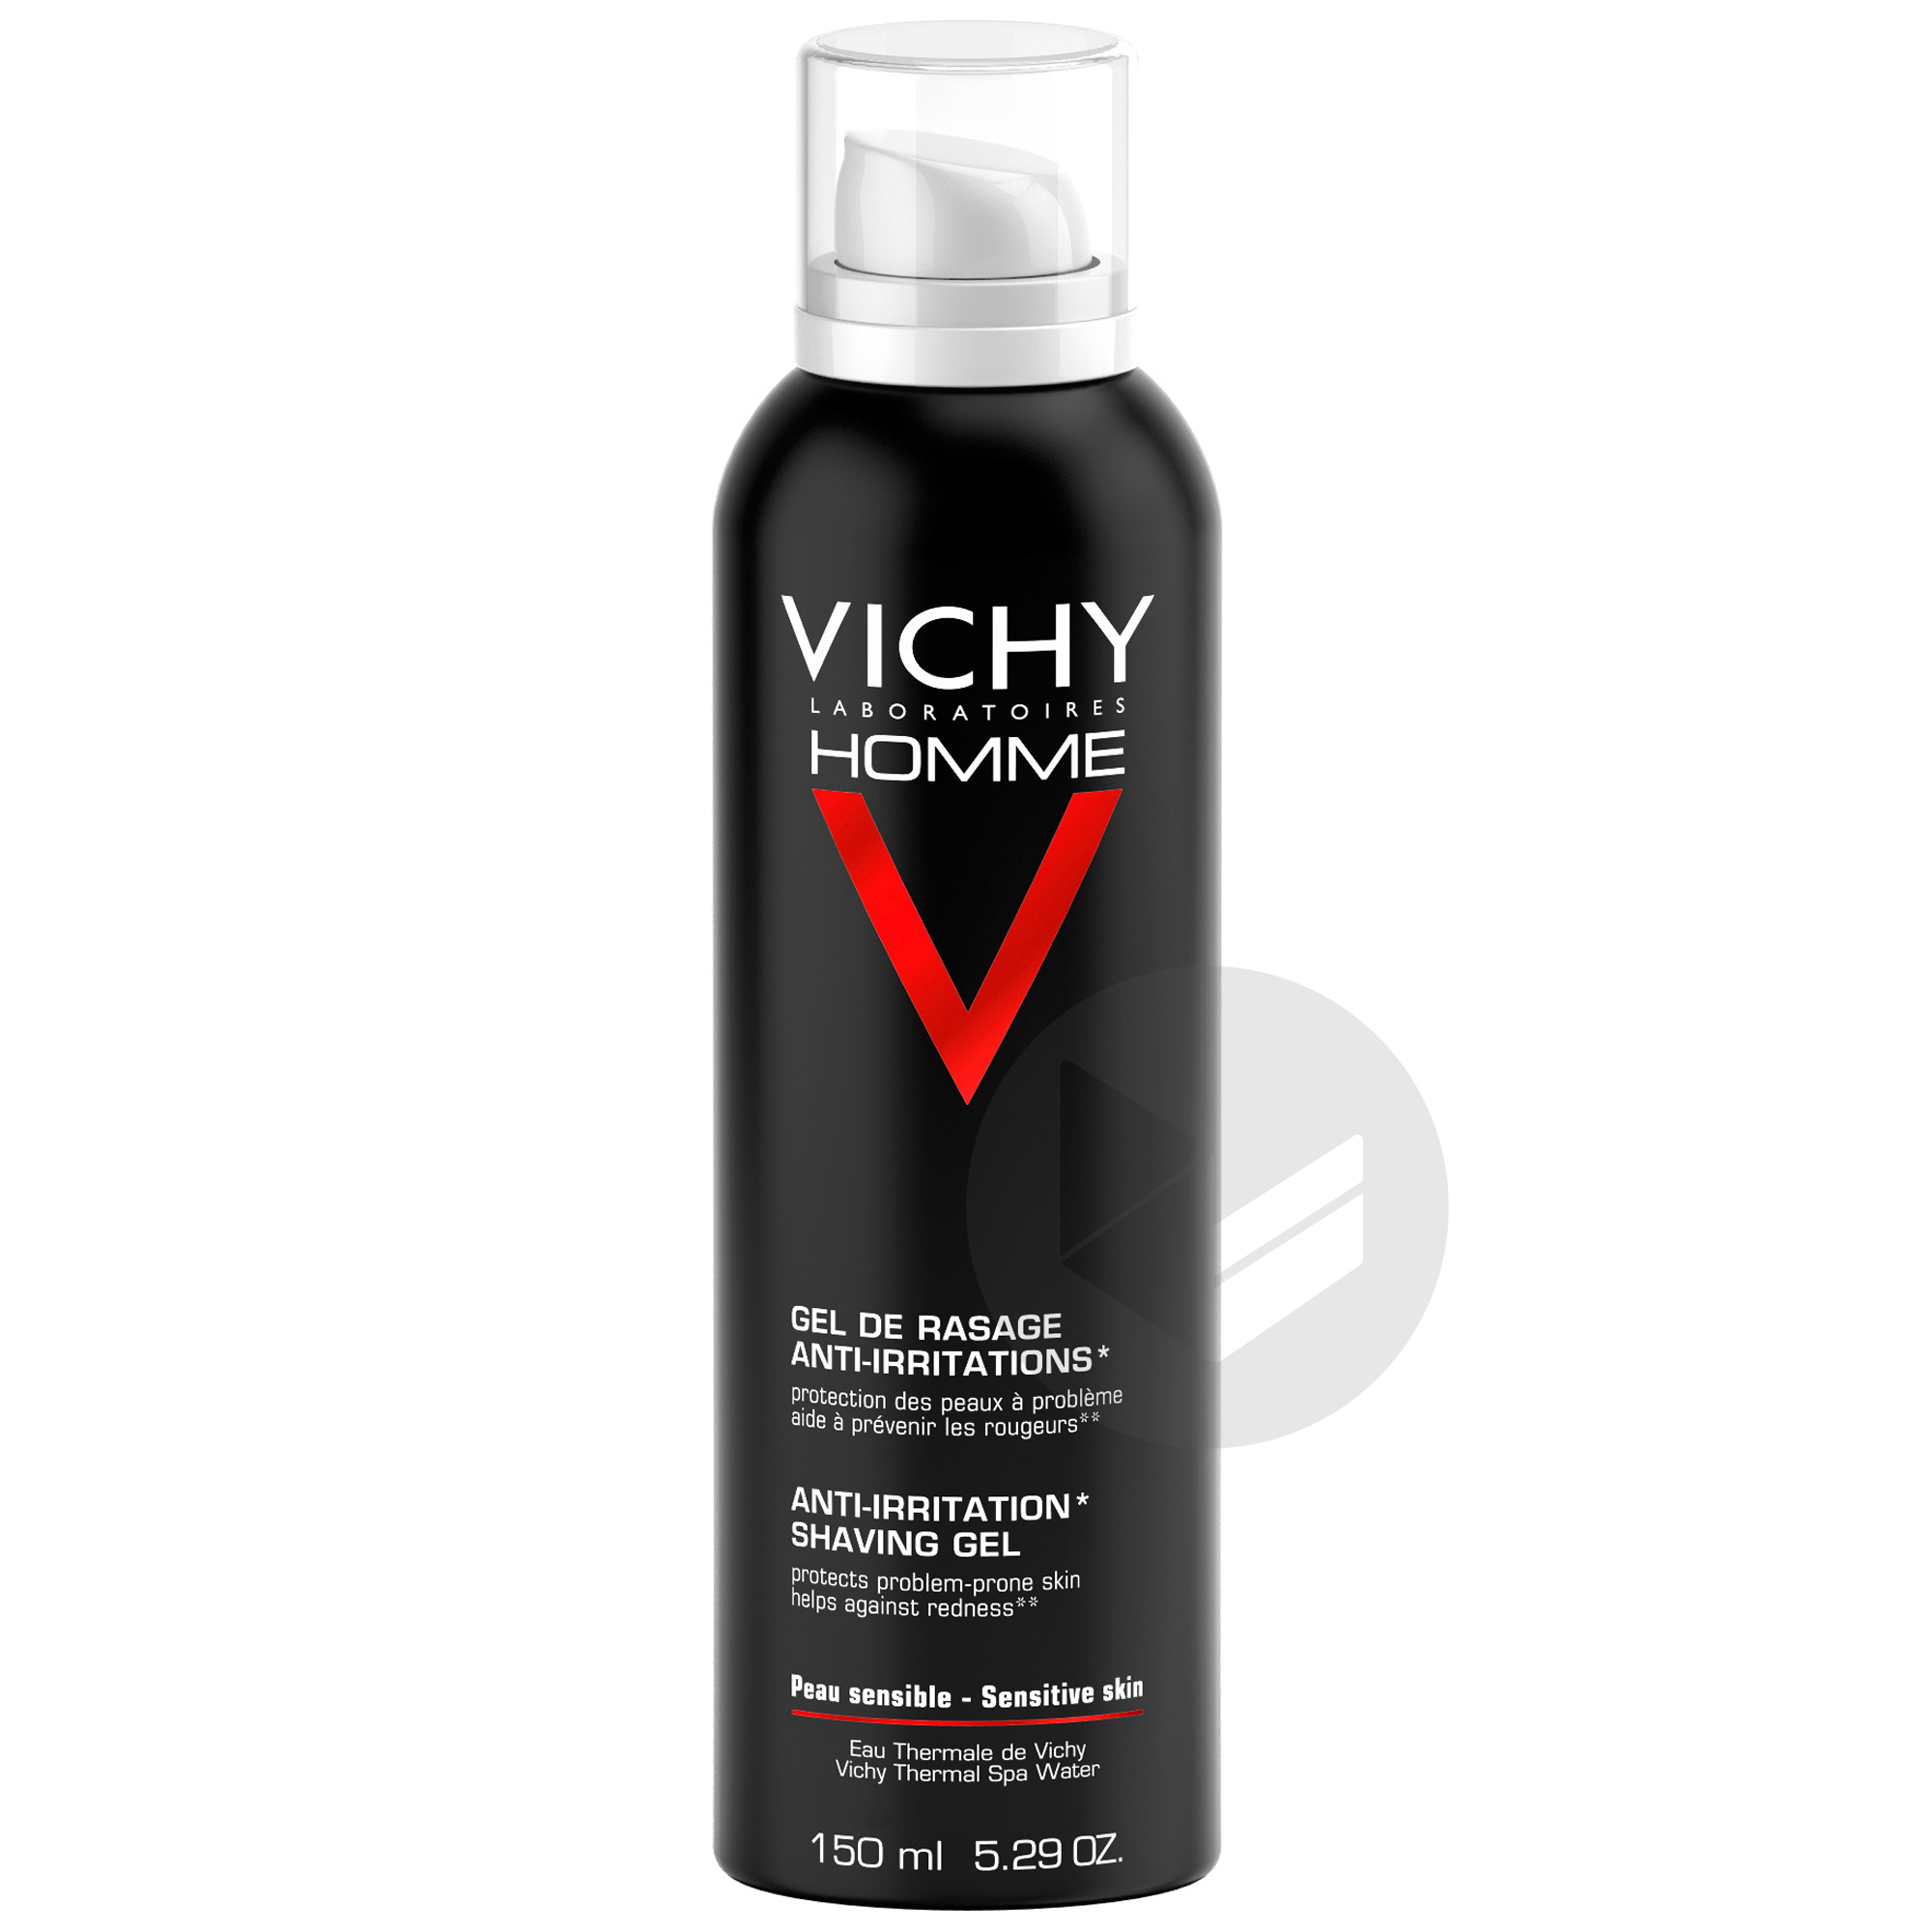 Vichy Homme Gel de rasage Gel De Rasage - Anti-Irritations